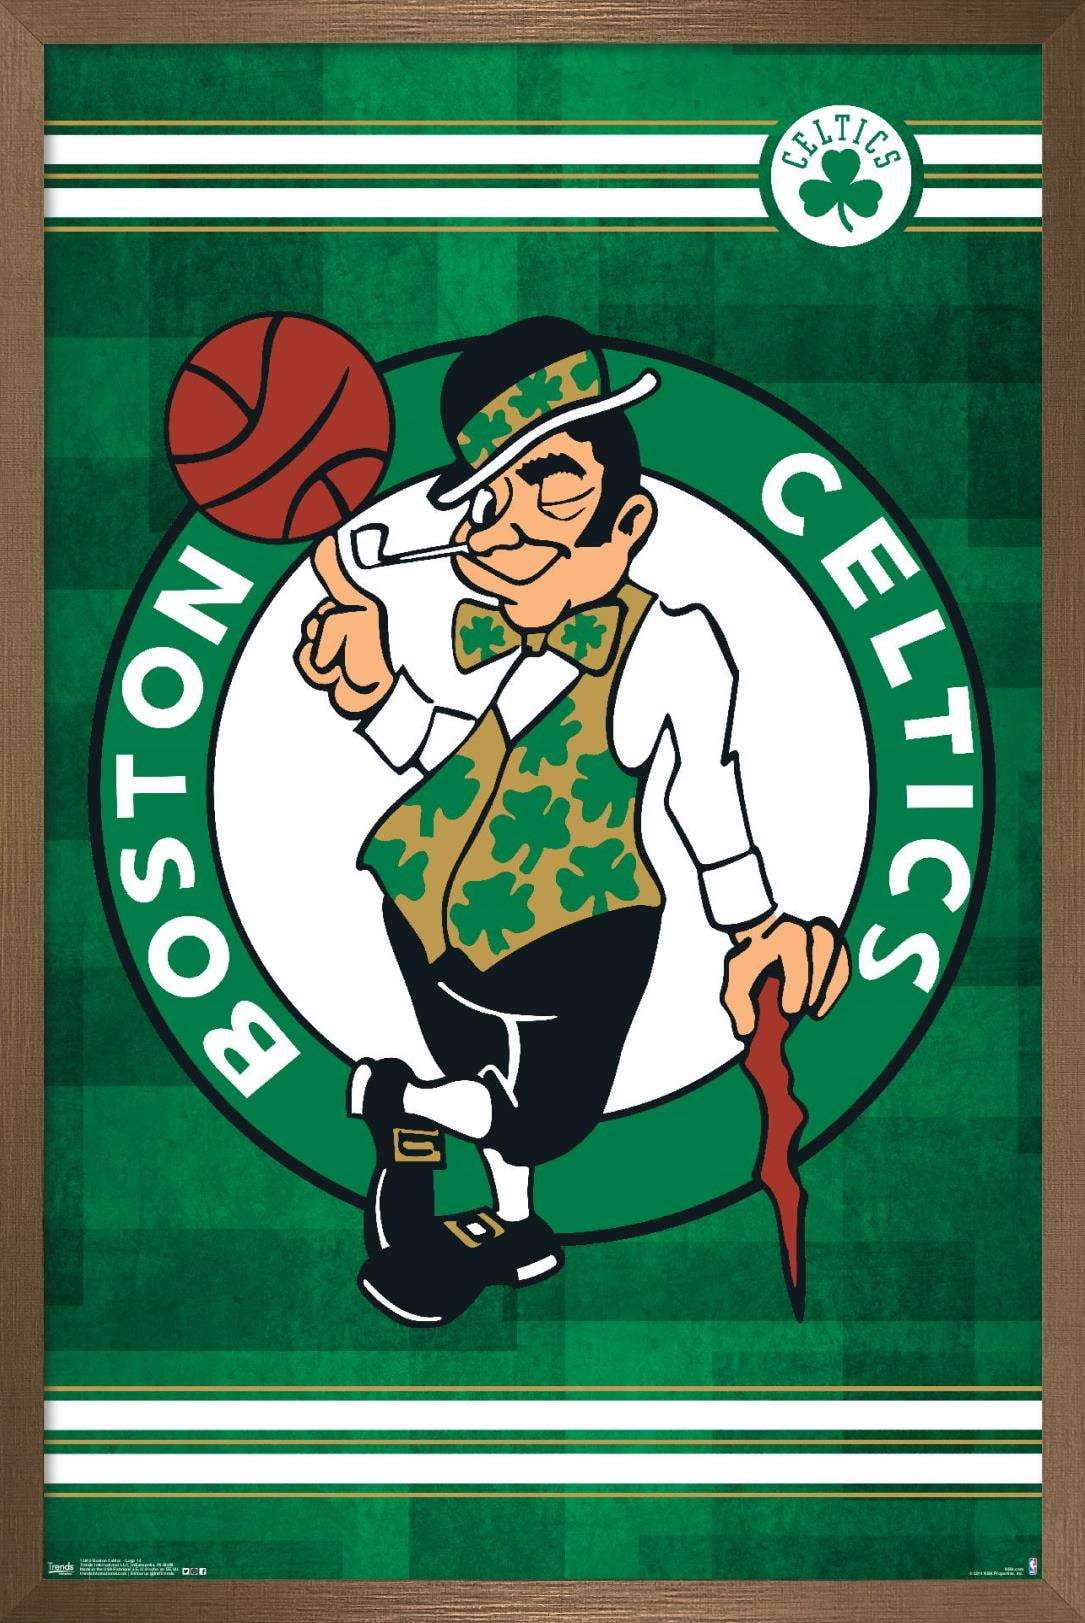 Boston Celtics NBA Basketball Home Decor Wall Art Print EXTRA LARGE  66"x44"